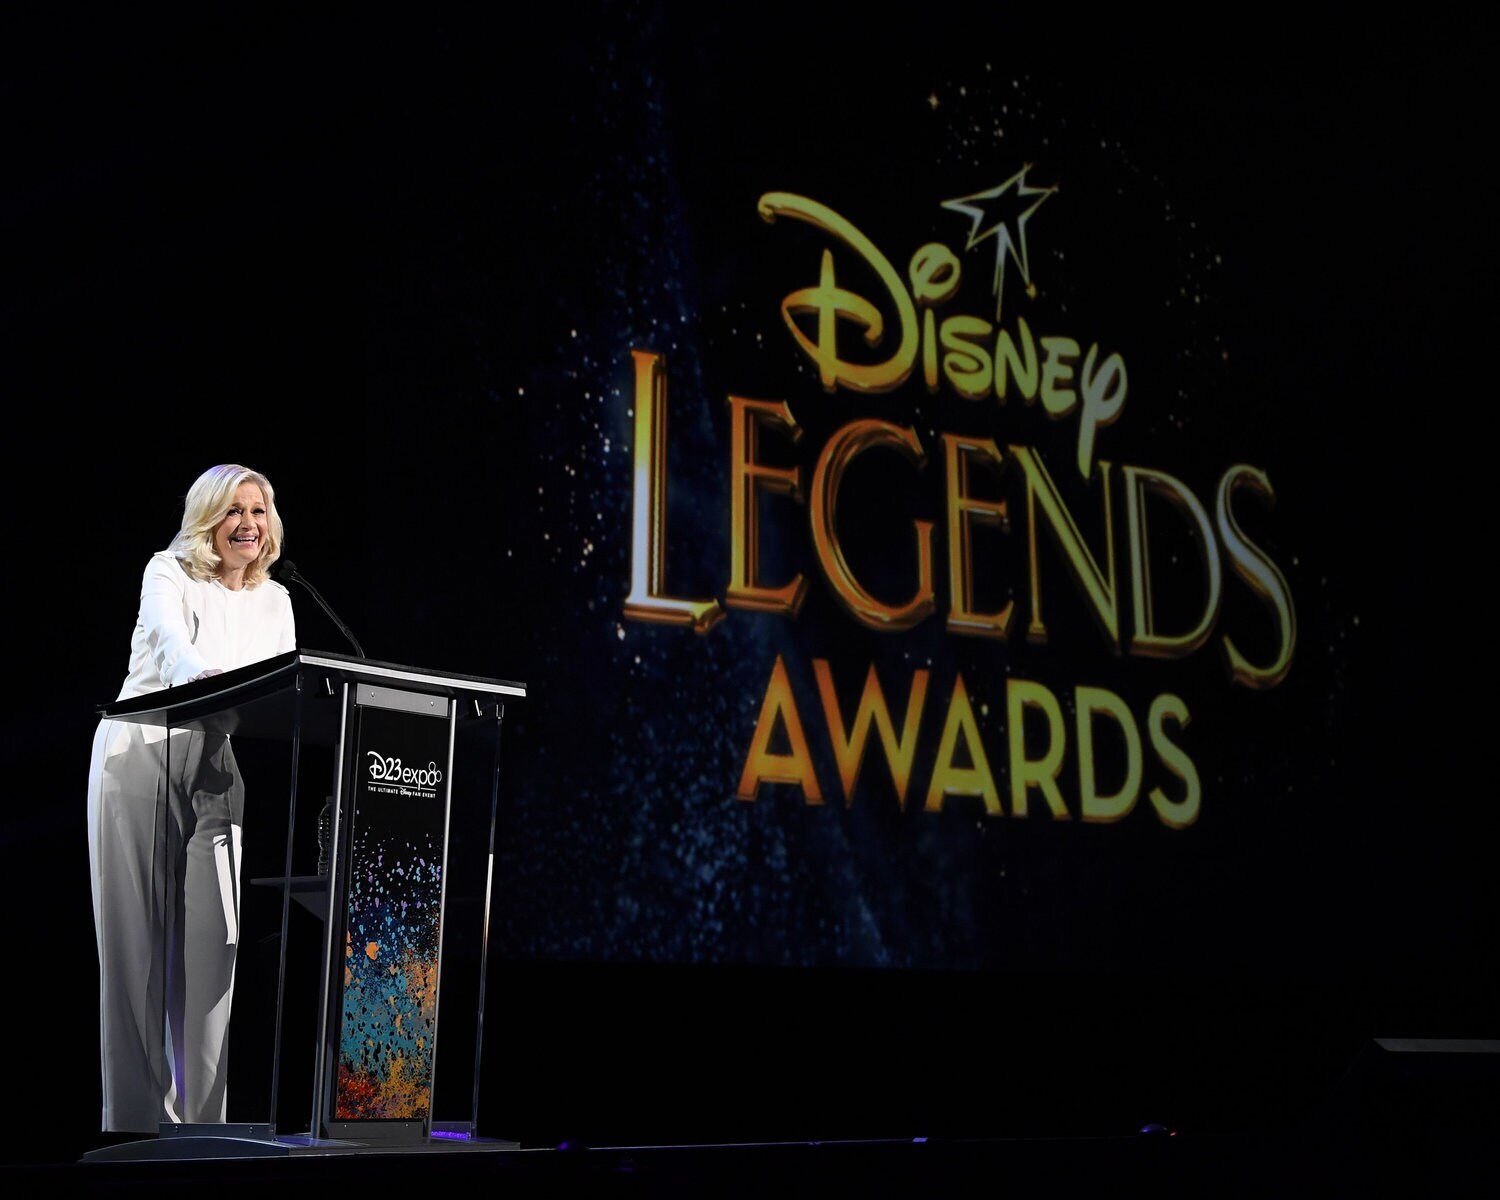 Diane Sawyer at the Disney Legends Awards podium